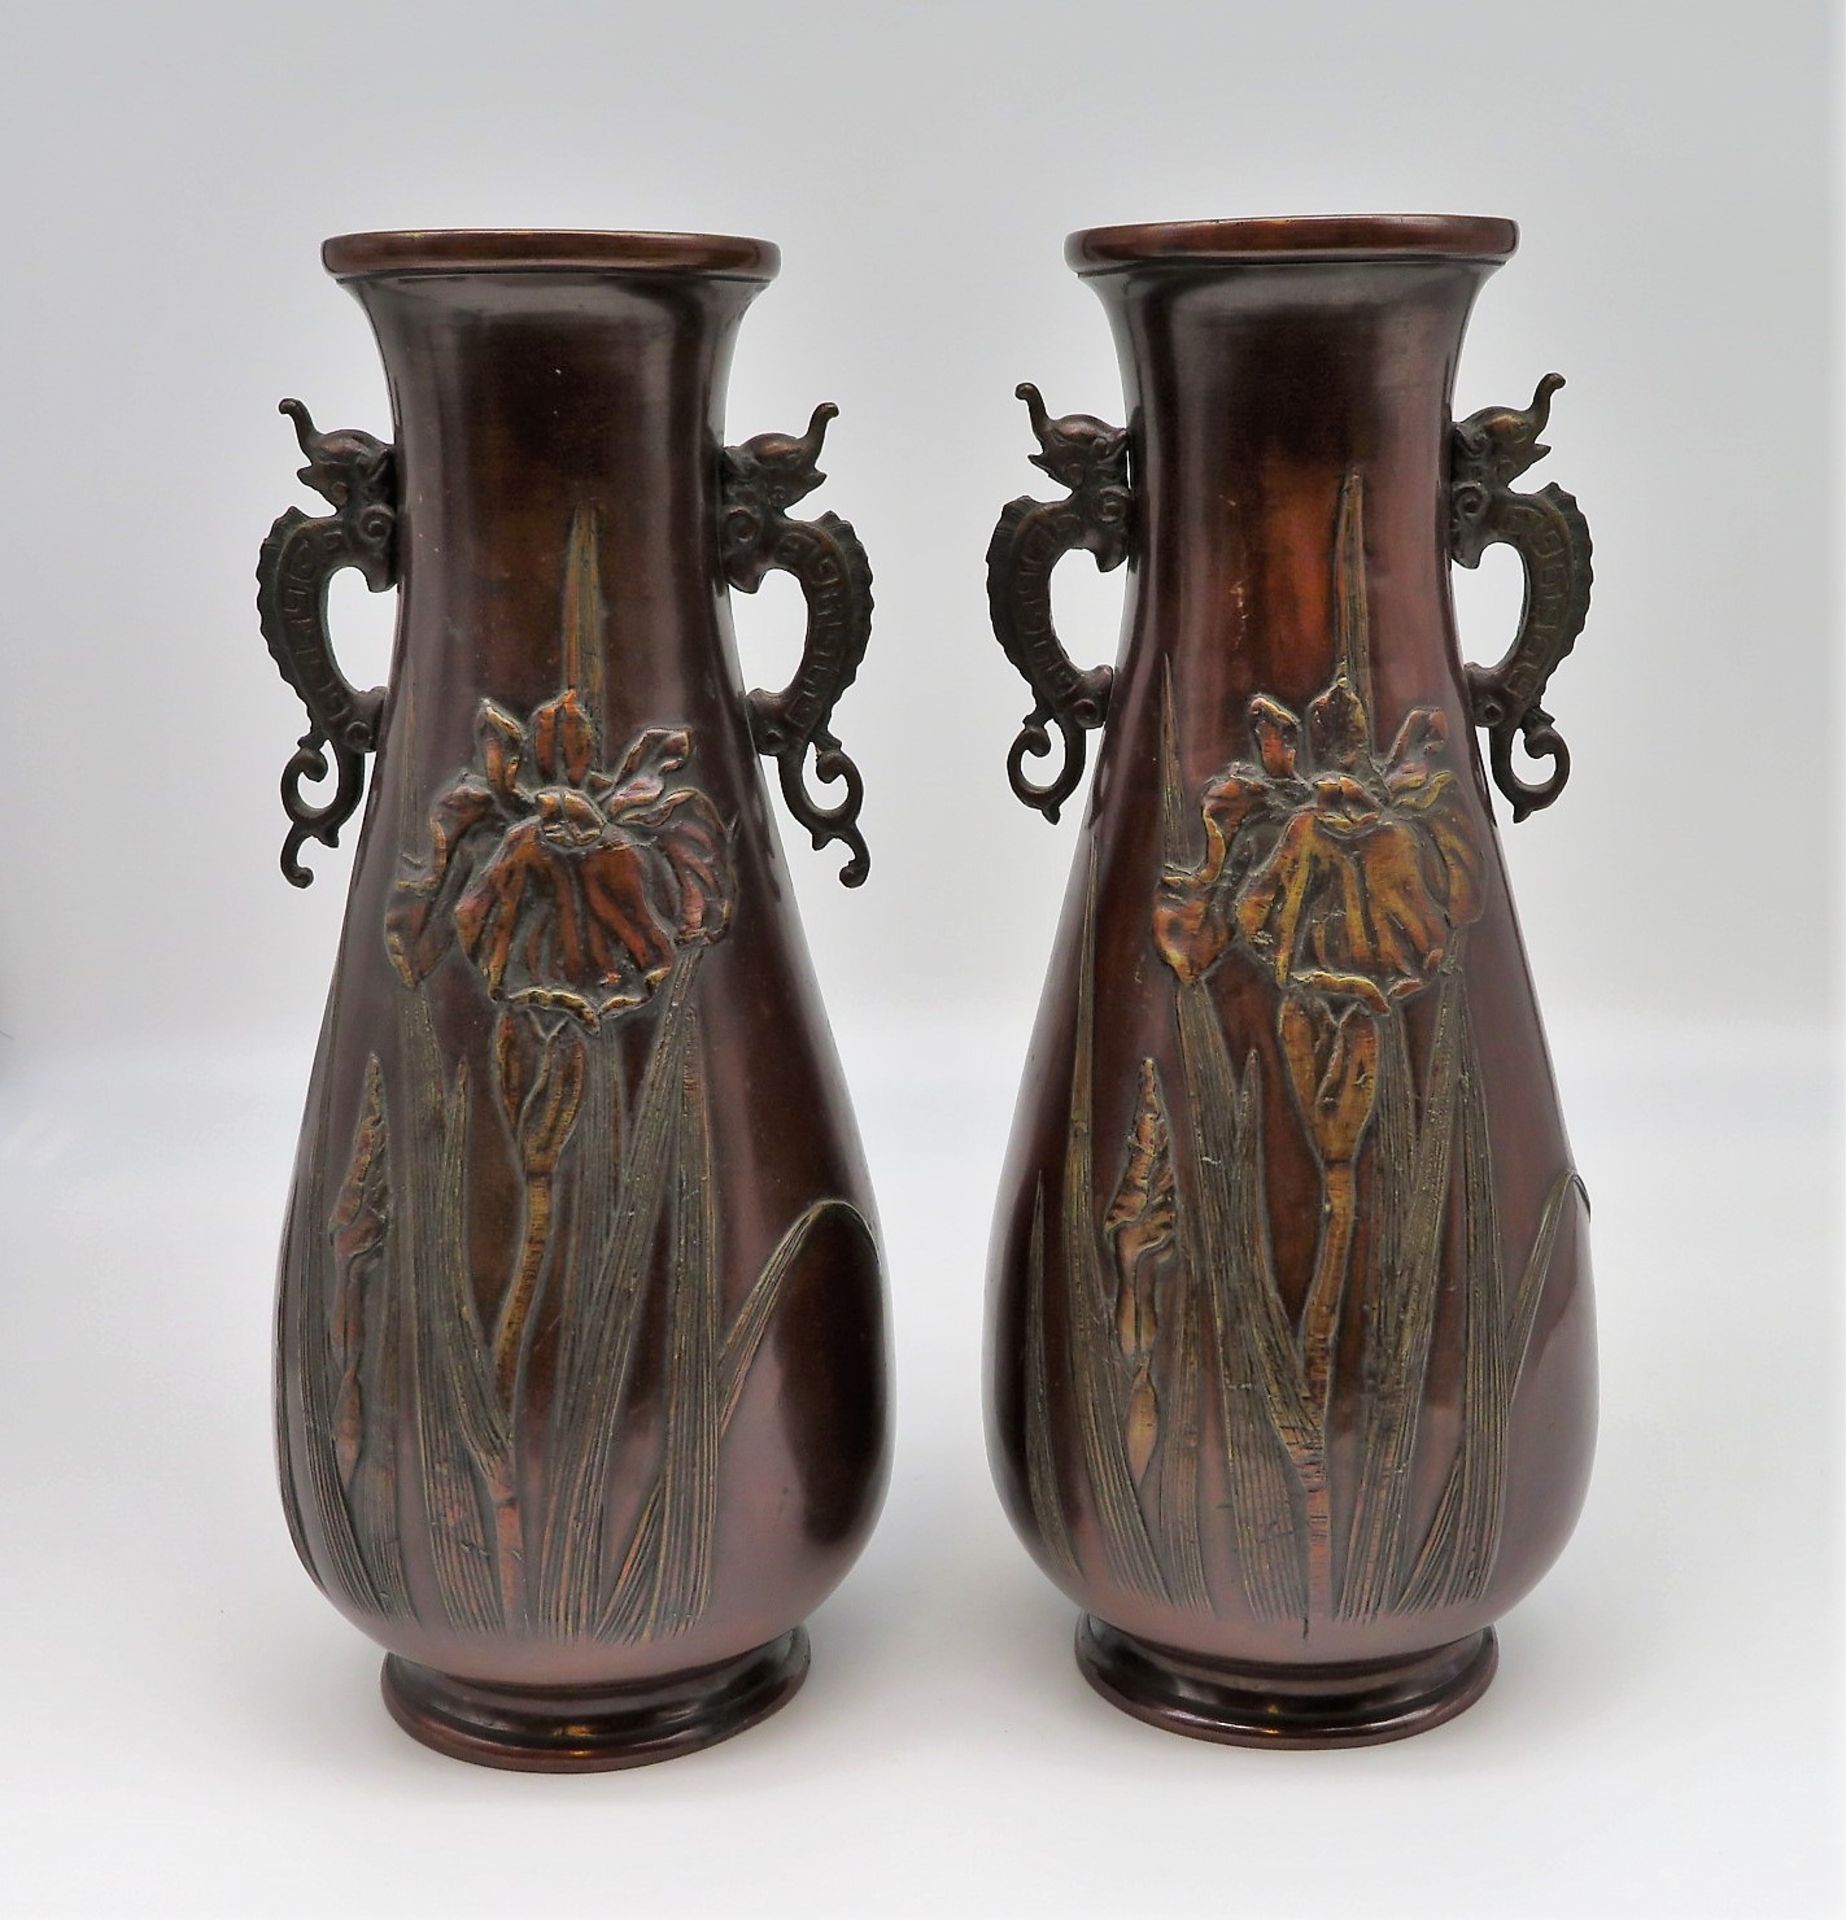 2 Vasen, Japan, um 1900, Bronze patiniert, h 31 cm, d 14 cm.